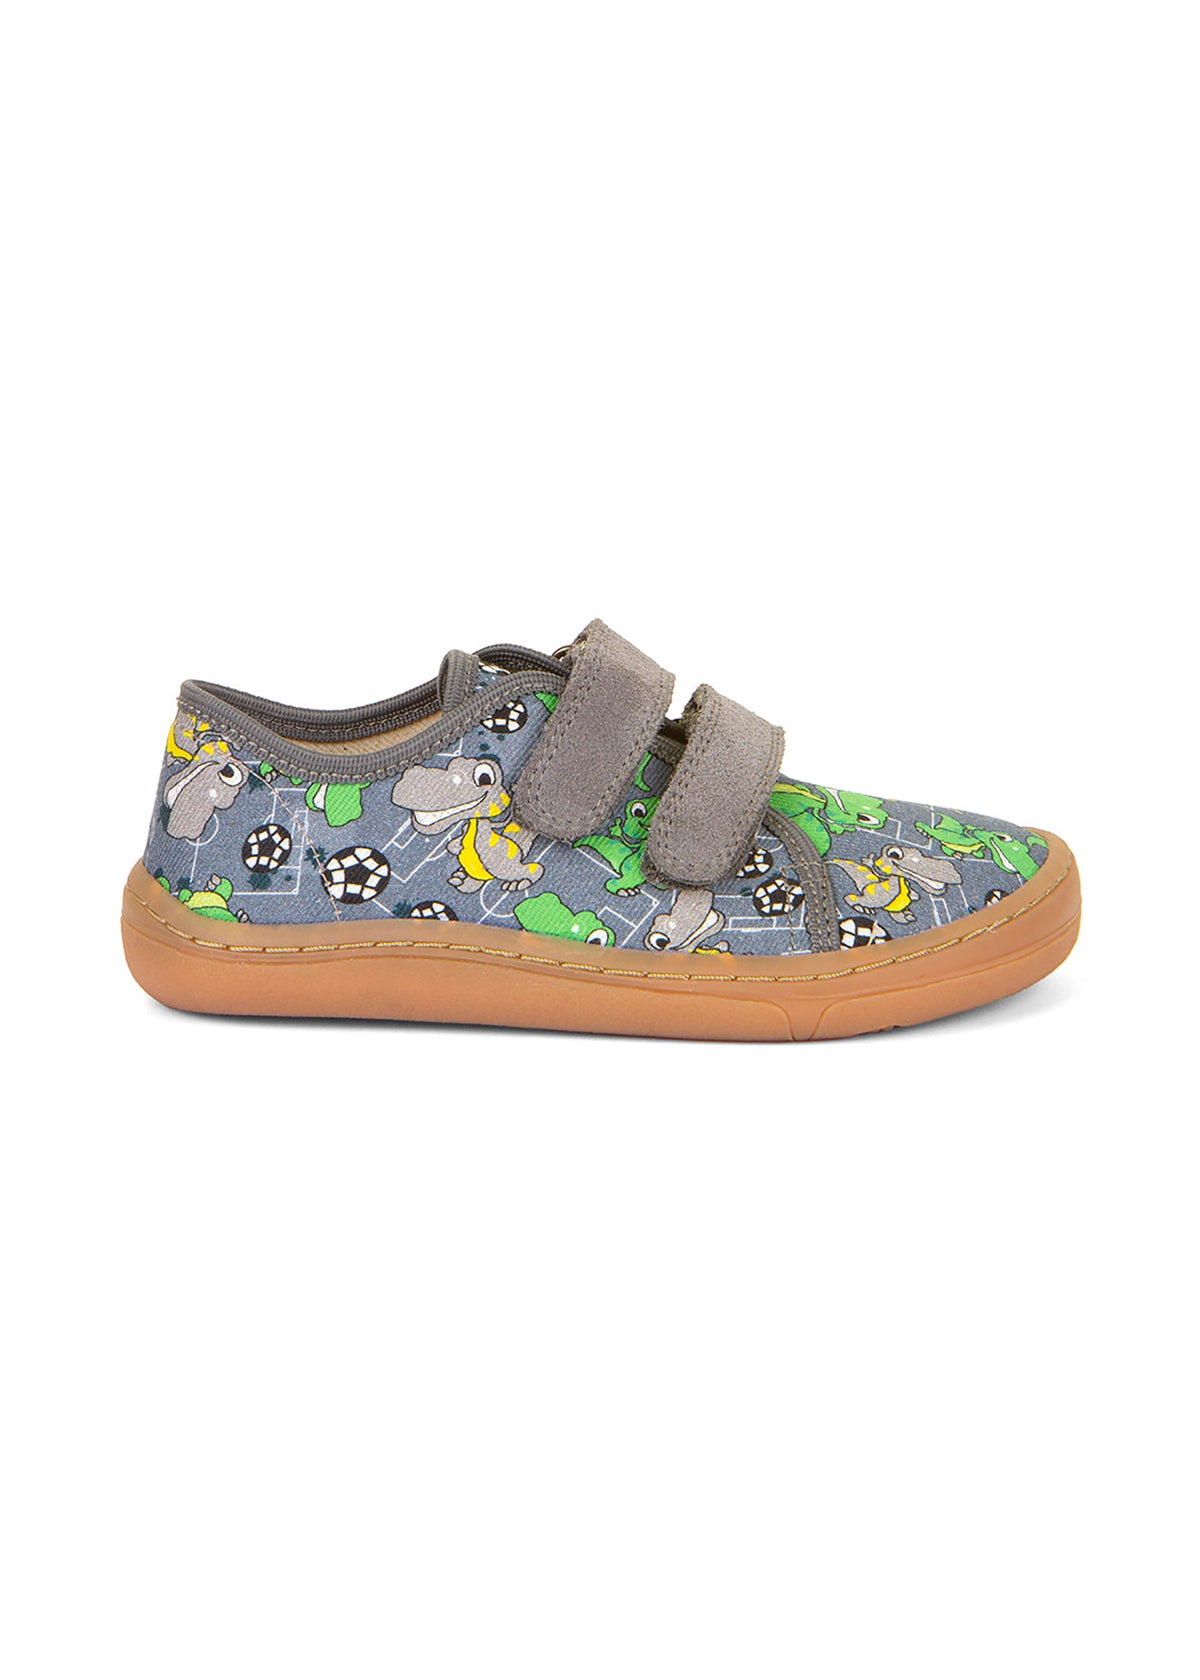 Children's barefoot sneakers - gray, dinos